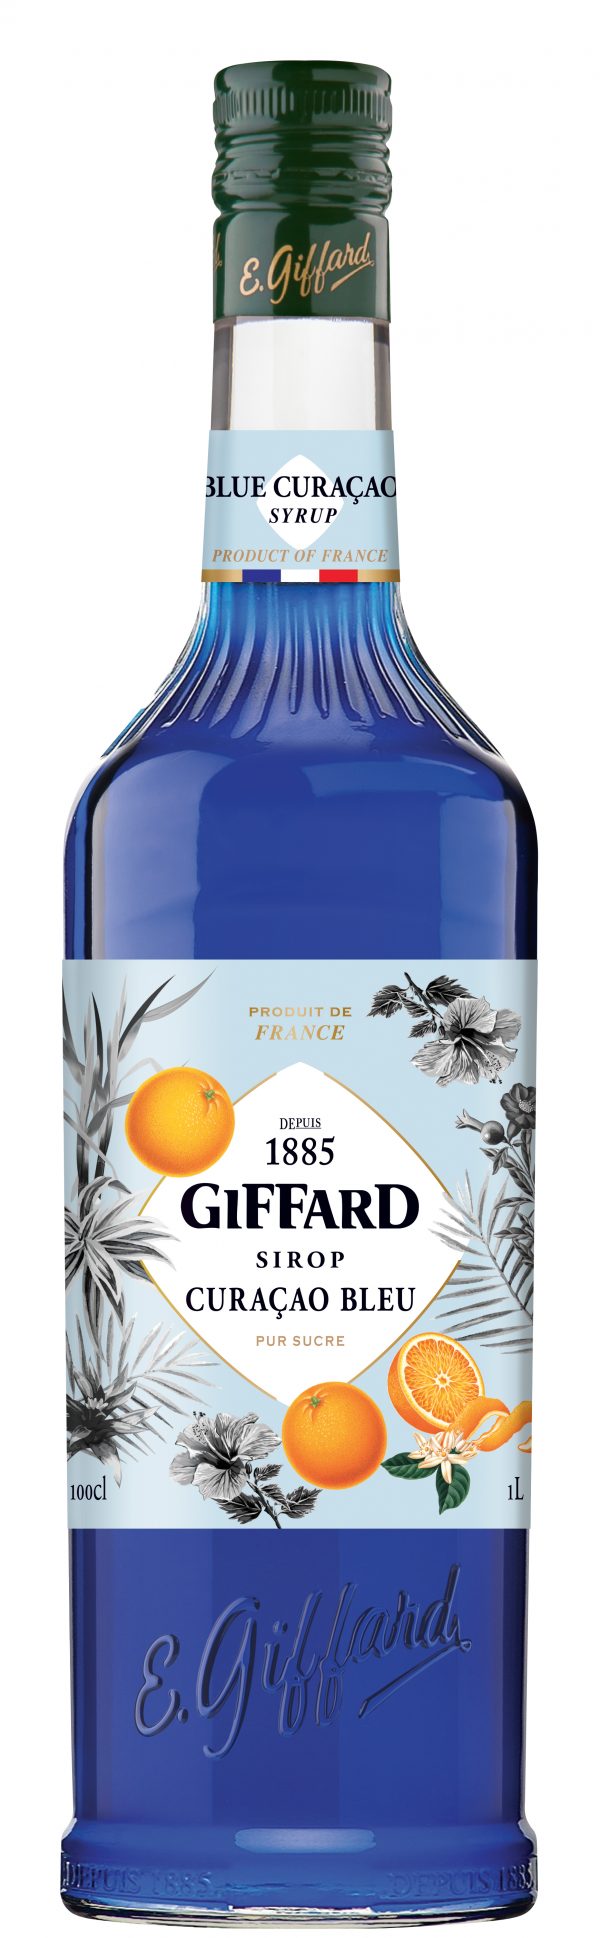 Blue Curaçao Syrup, Flaske